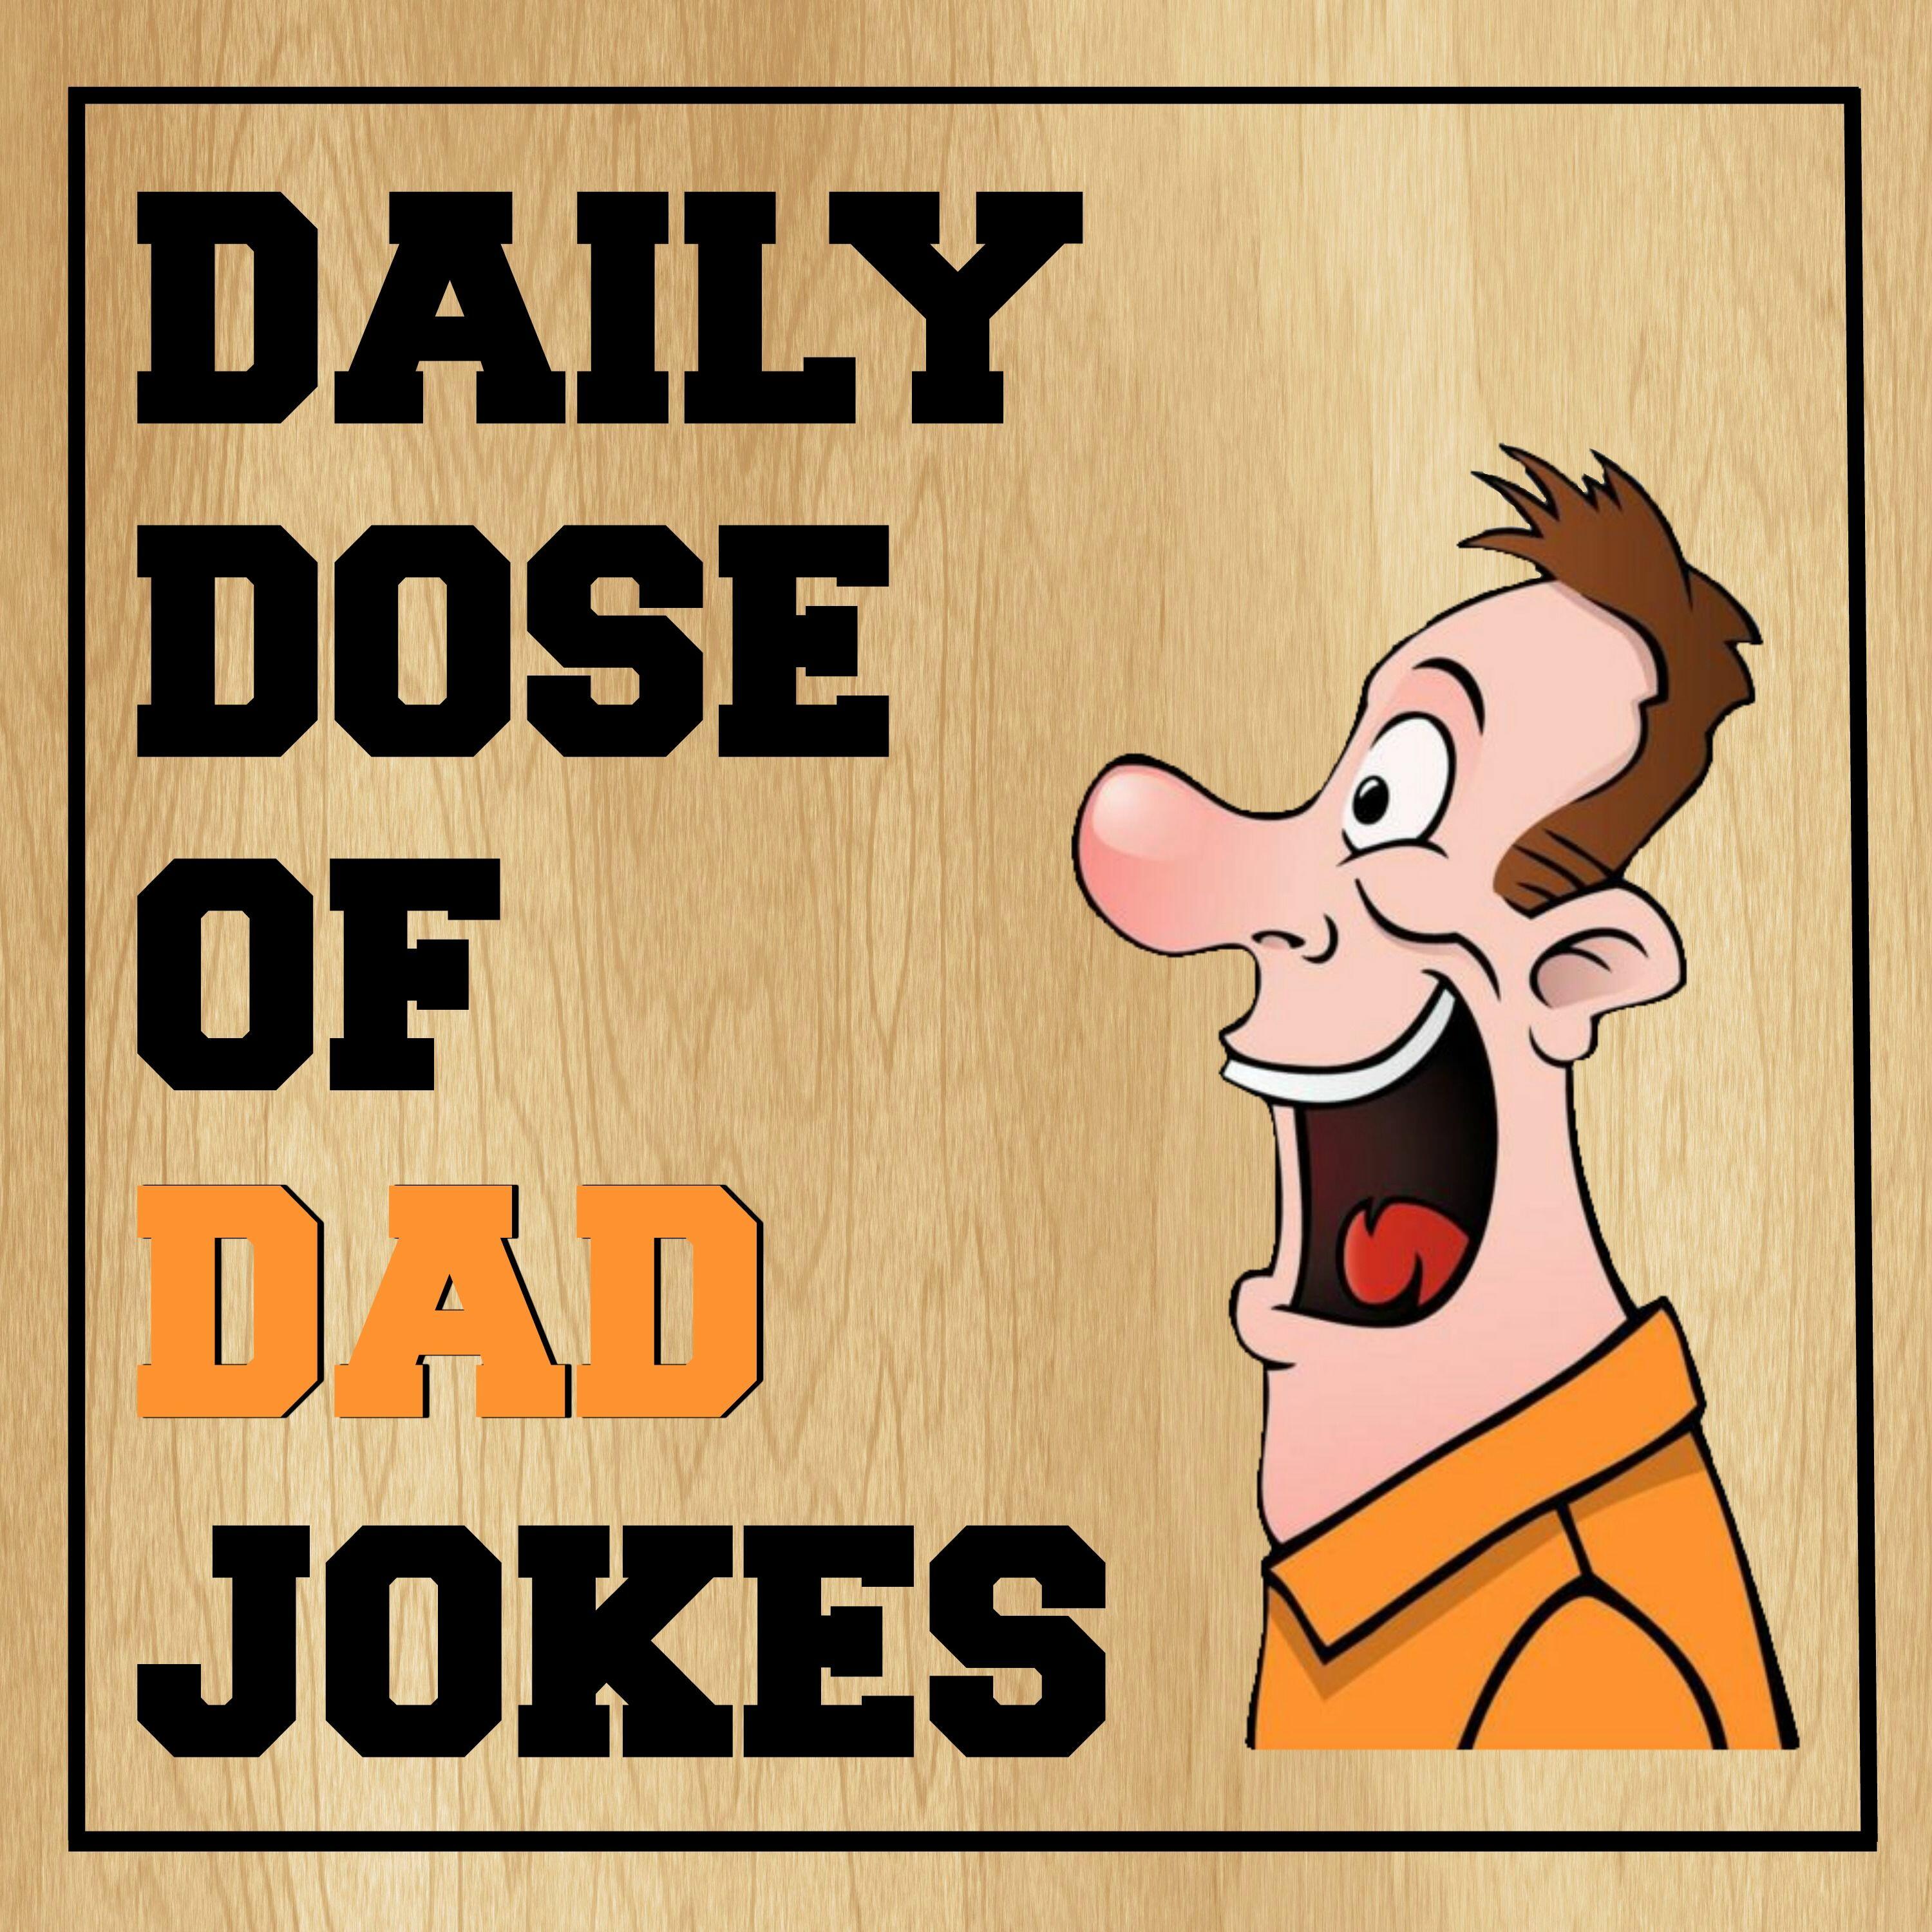 Daddy use. Dad jokes. Постер 648 "joke" 100х153 см. Daily dose. Подкаст анекдоты.